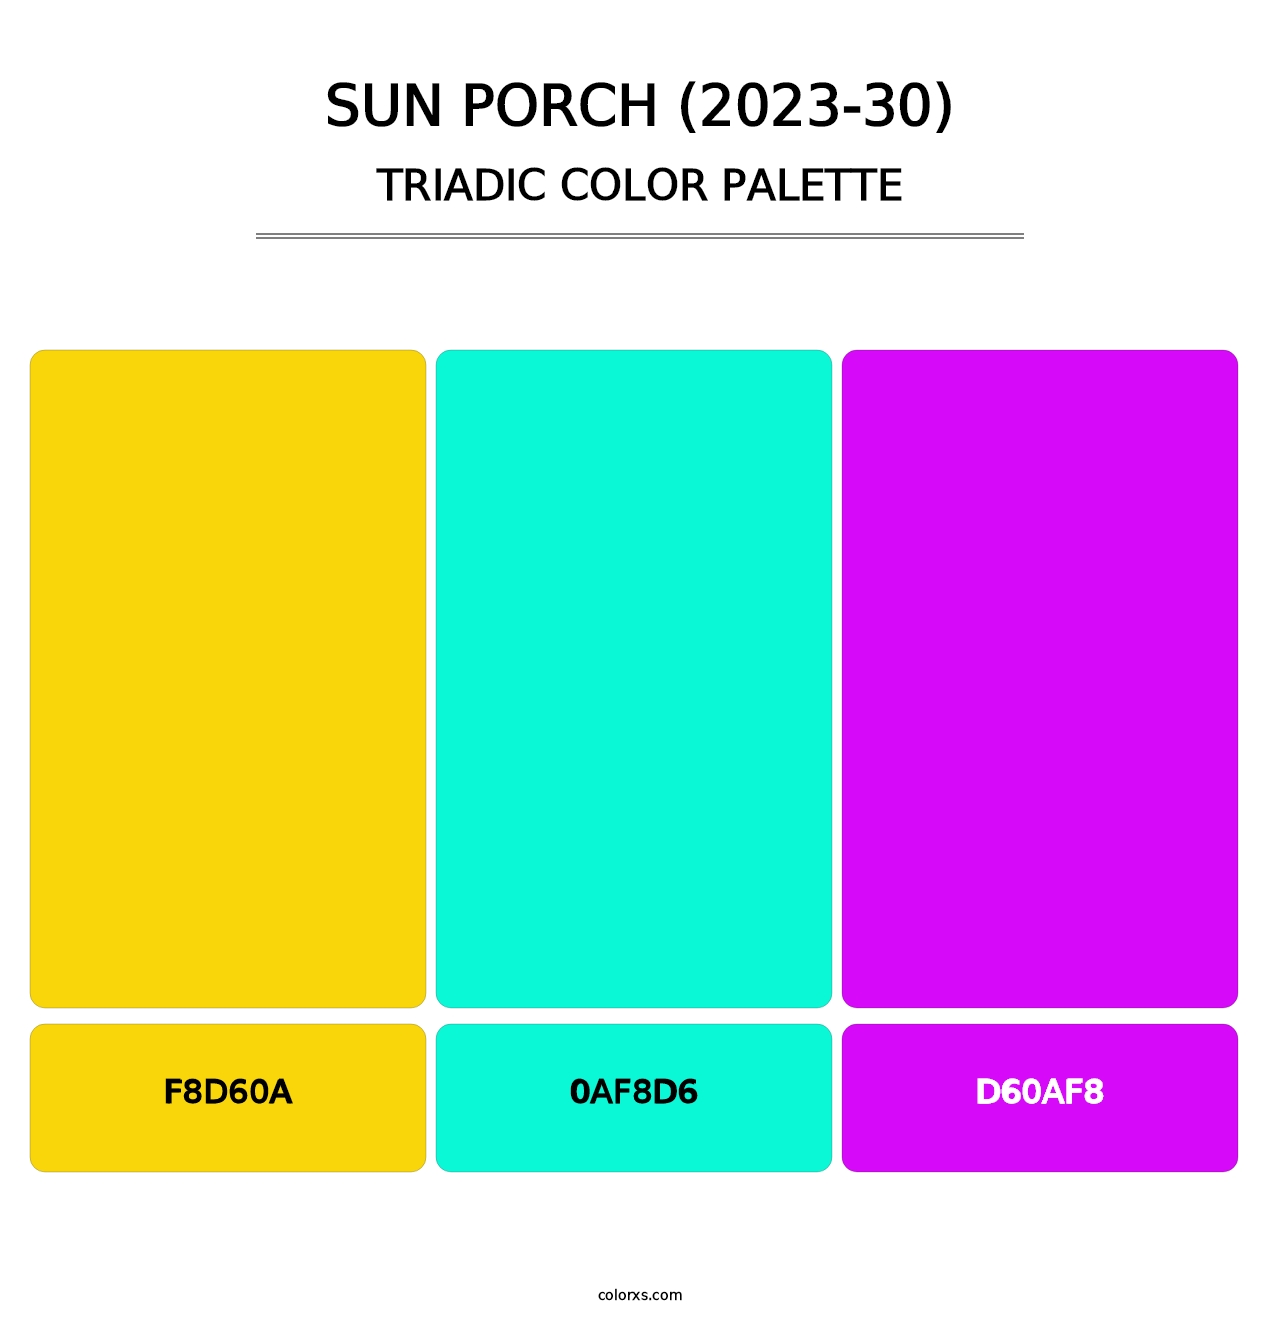 Sun Porch (2023-30) - Triadic Color Palette